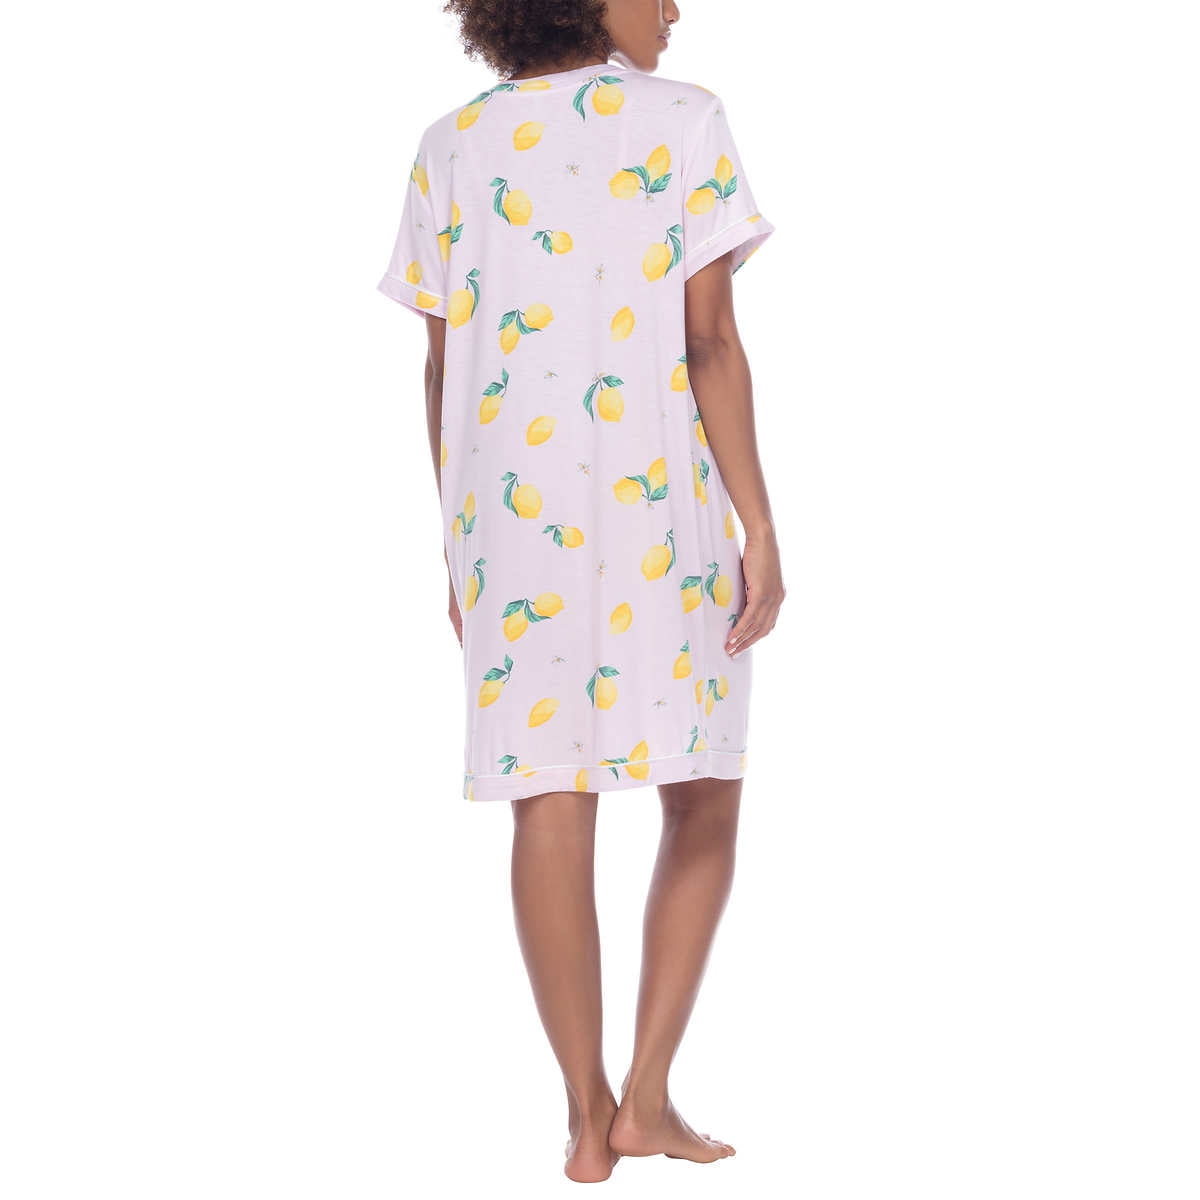 Honeydew Ladies' Sleep Shirt, 2-pack, Size Small 